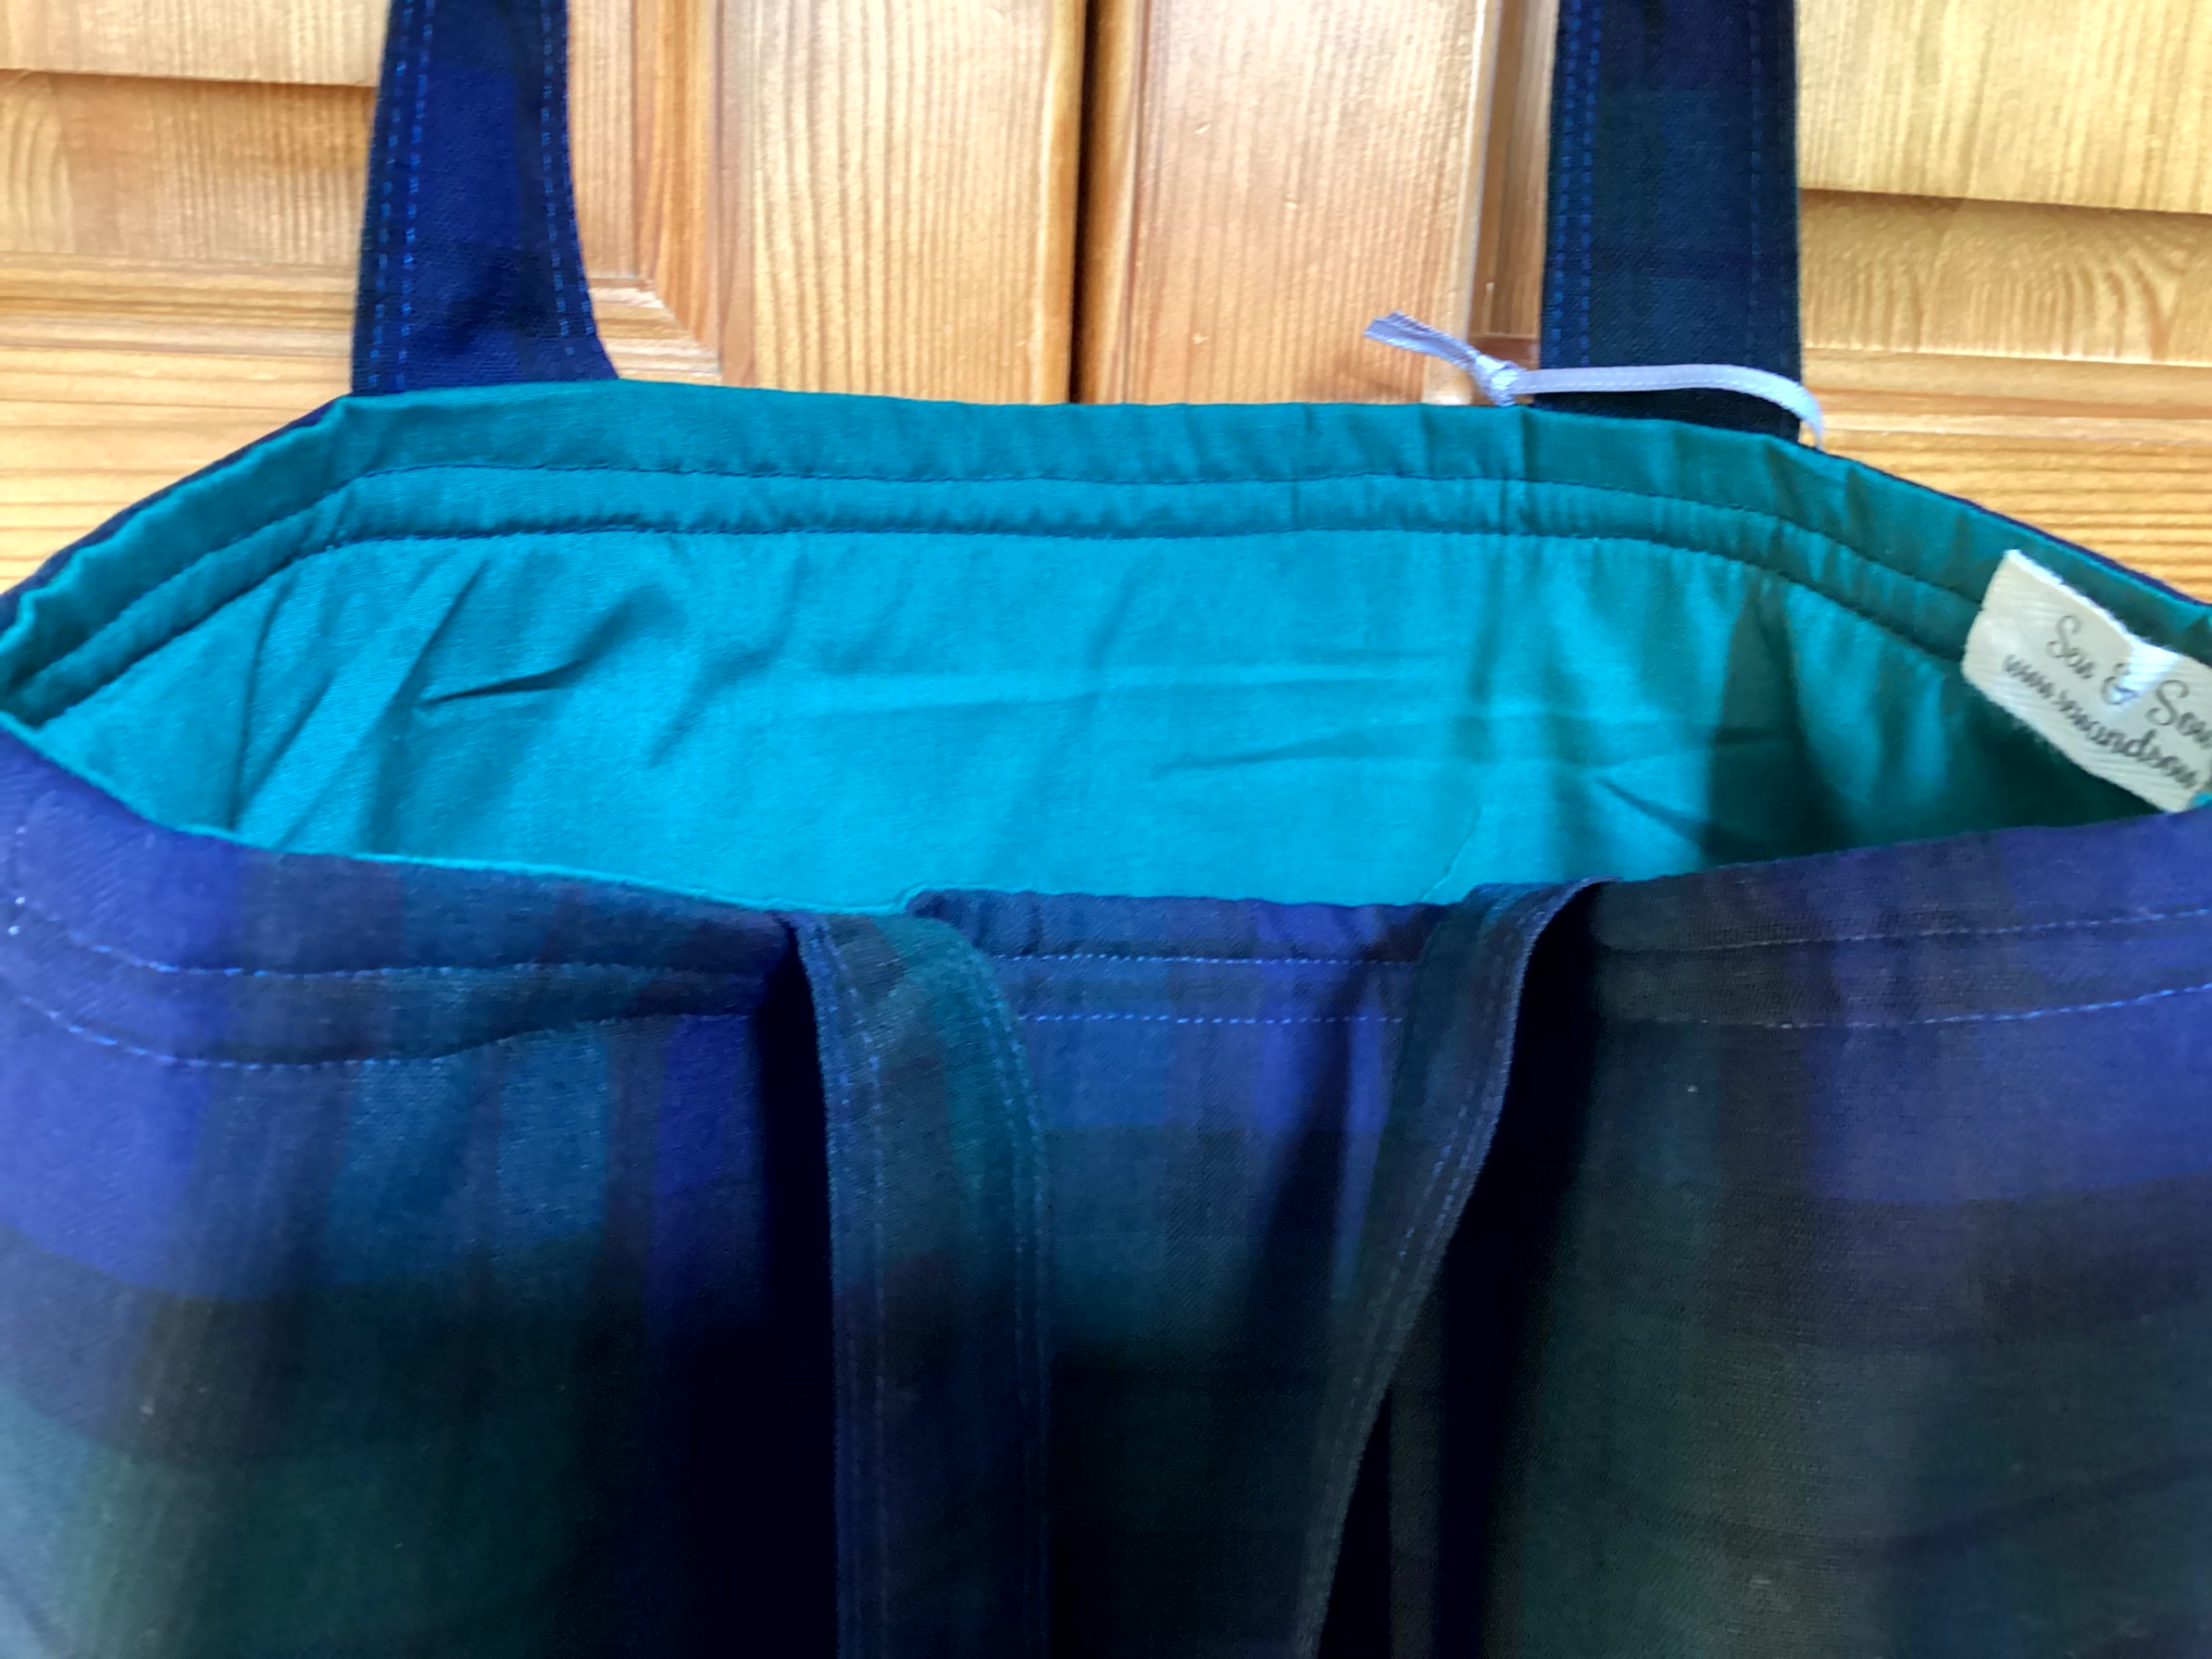 Tote Bag - dark green and blue tartan